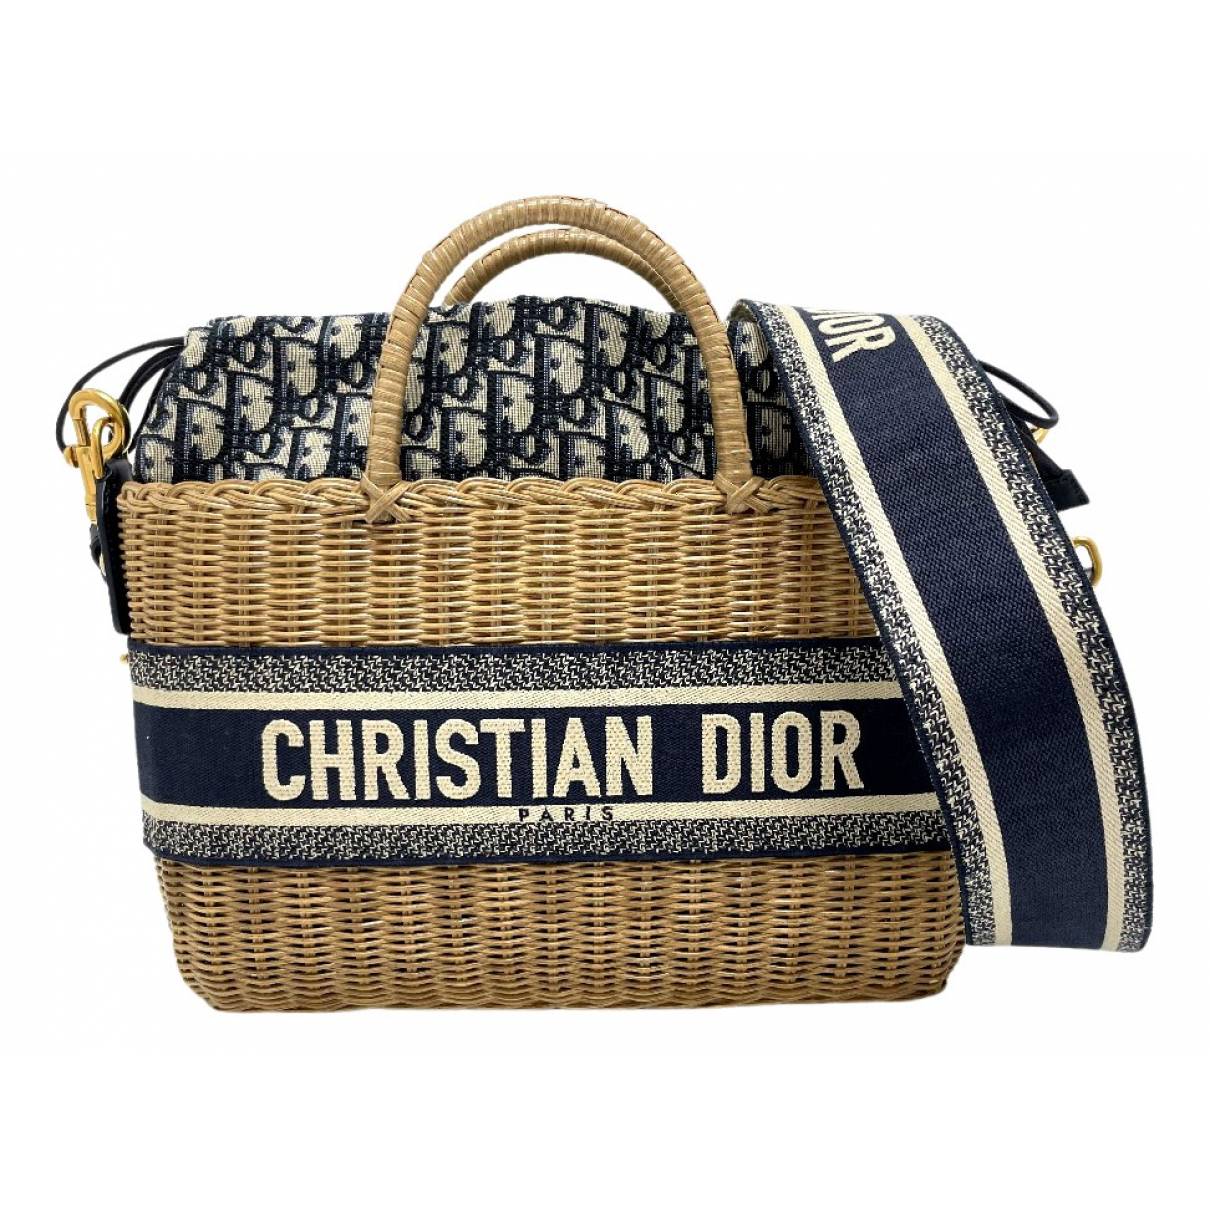 Dior Handbags for Women - Vestiaire Collective | Vestiaire Collective (Global)